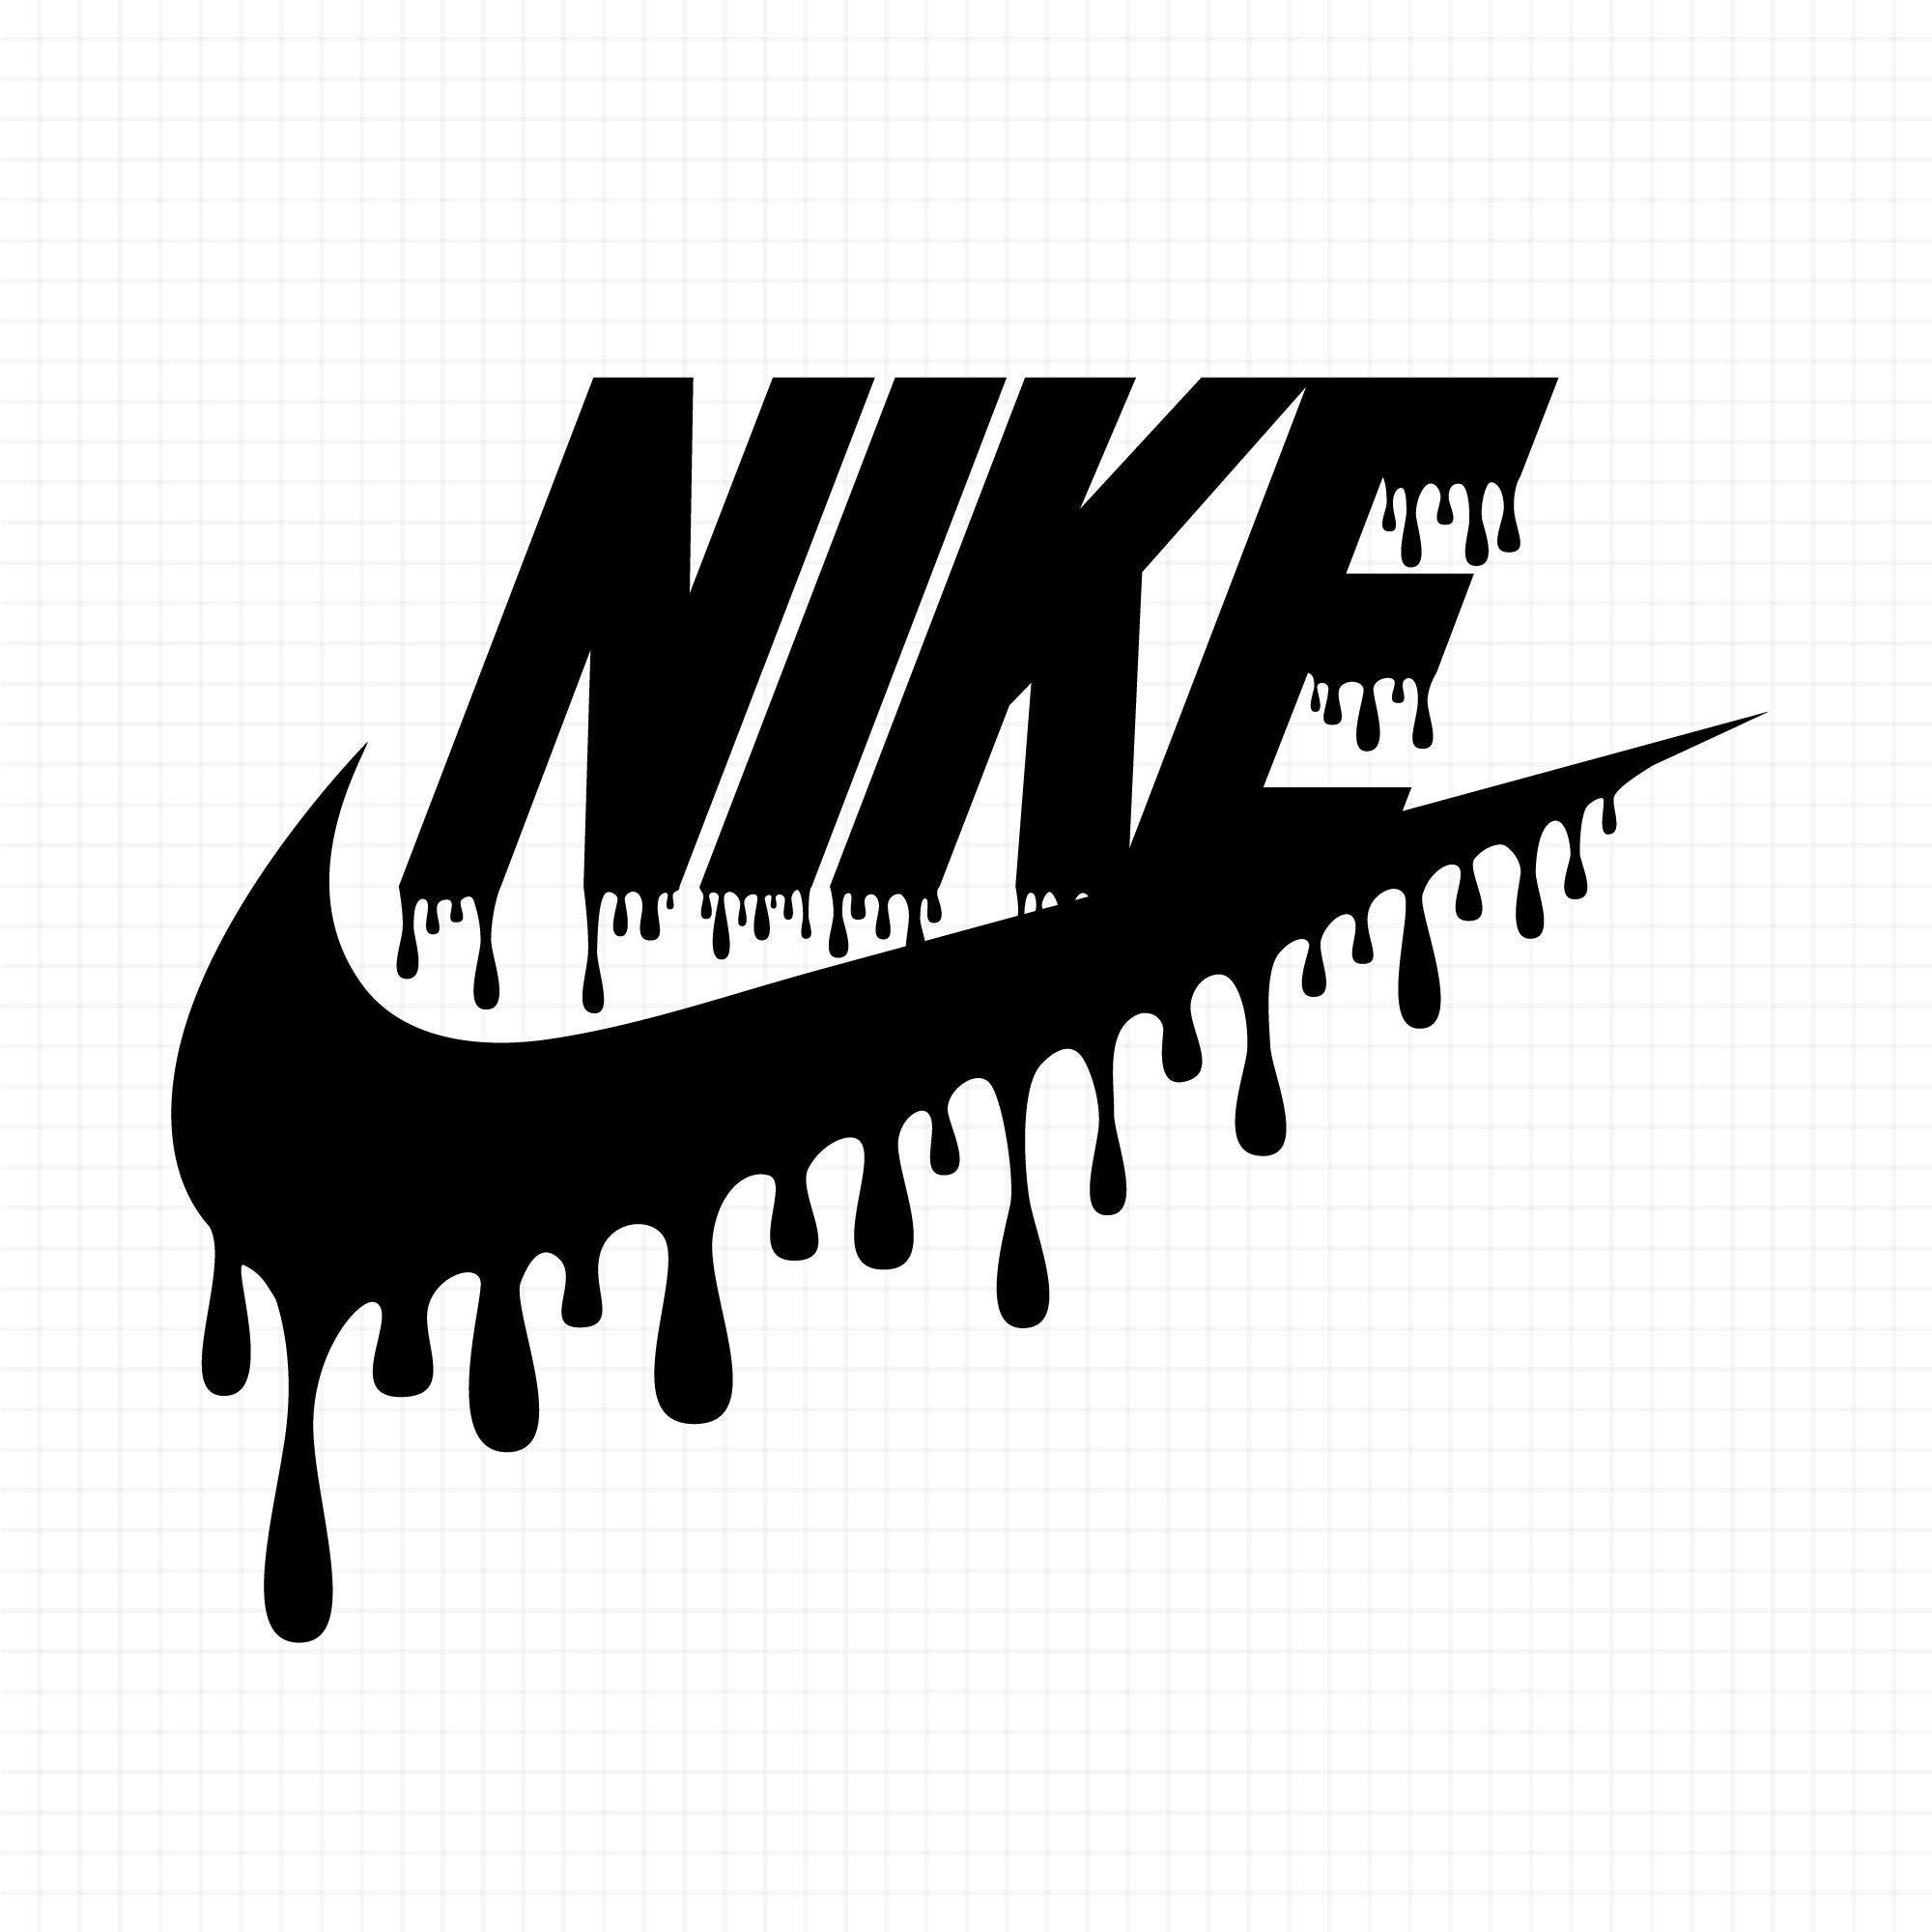 2000x2000 Nike logo wallpapers, Nike drawing, Nike logo vector